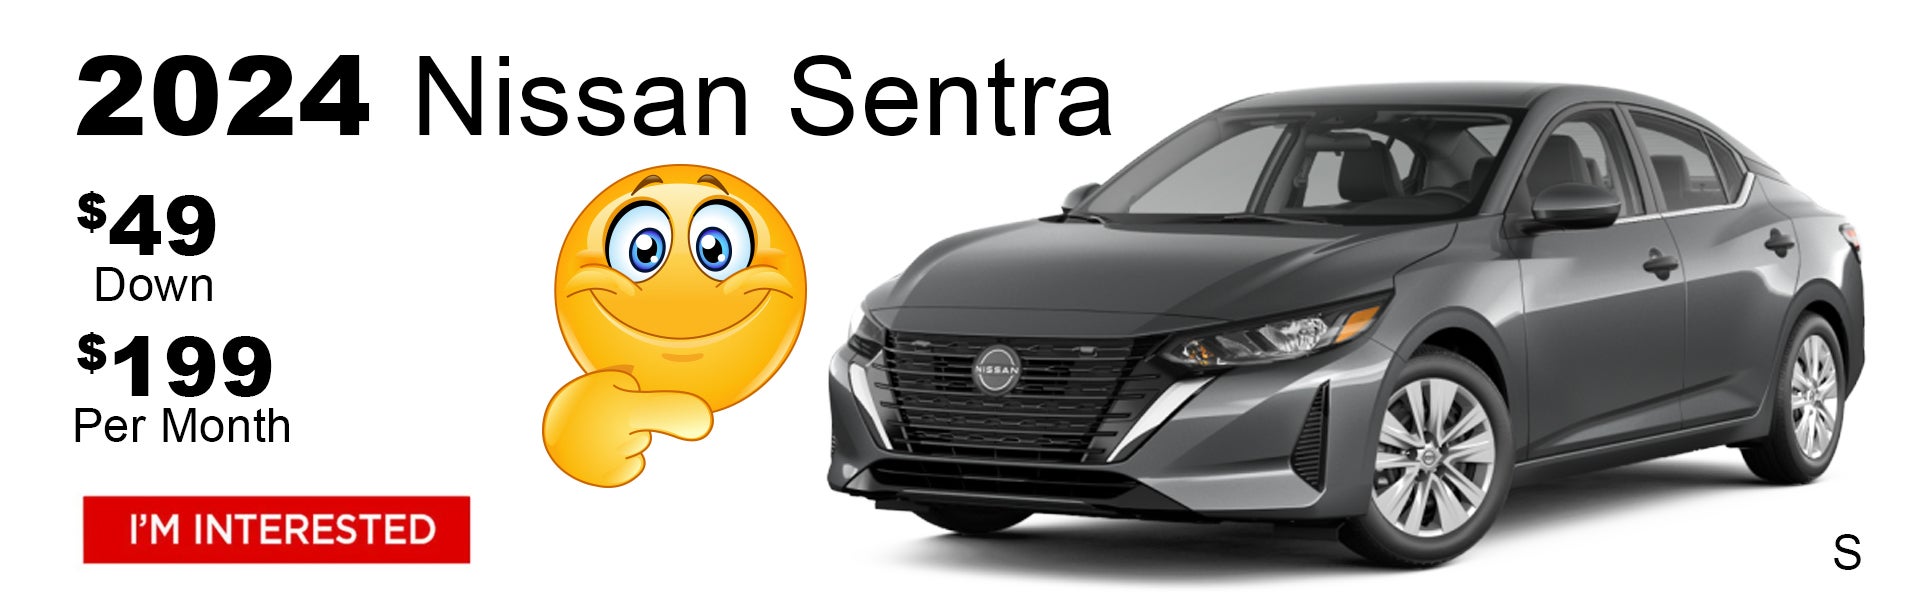 New Nissan Sentra $49 Dealer Special